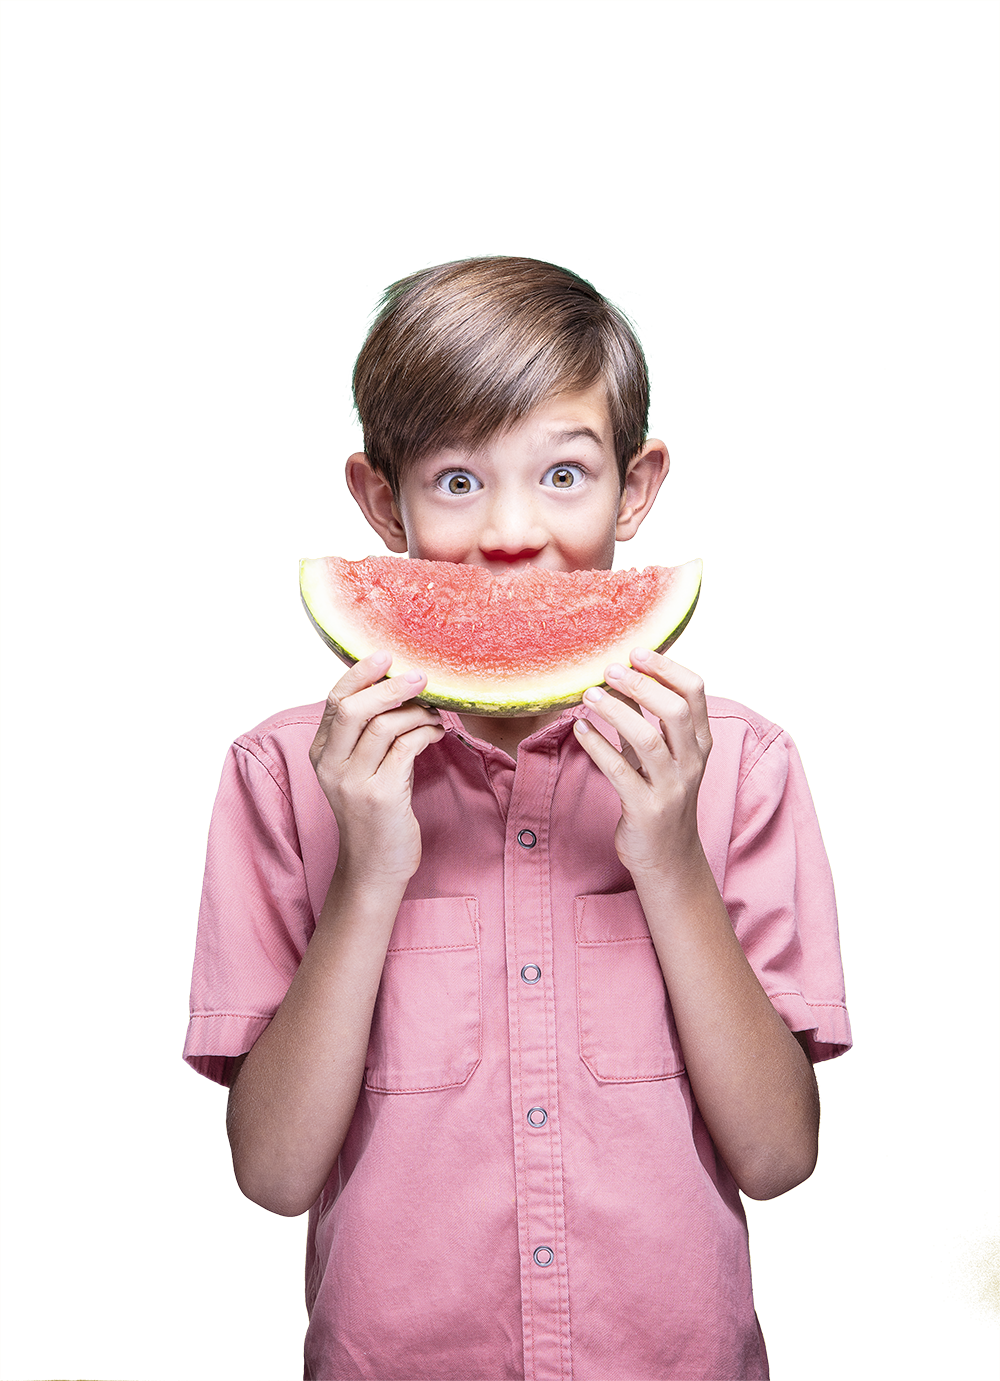 Boy eating a watermelon, watermelon flavor, watermelon flavored drink mix